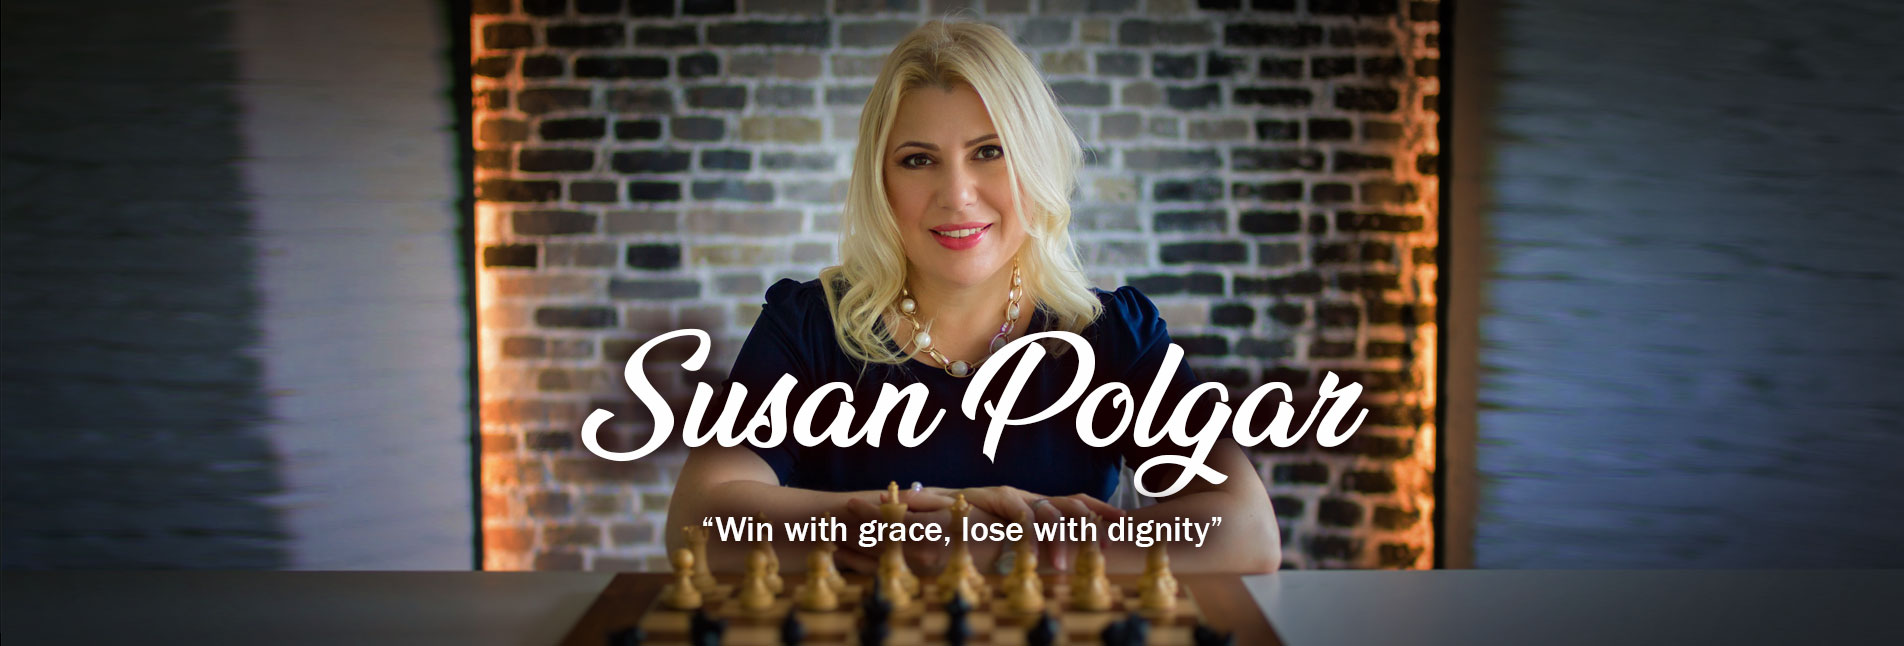 Chess Daily News by Susan Polgar Polgar sisters Archives - Chess Daily News  by Susan Polgar